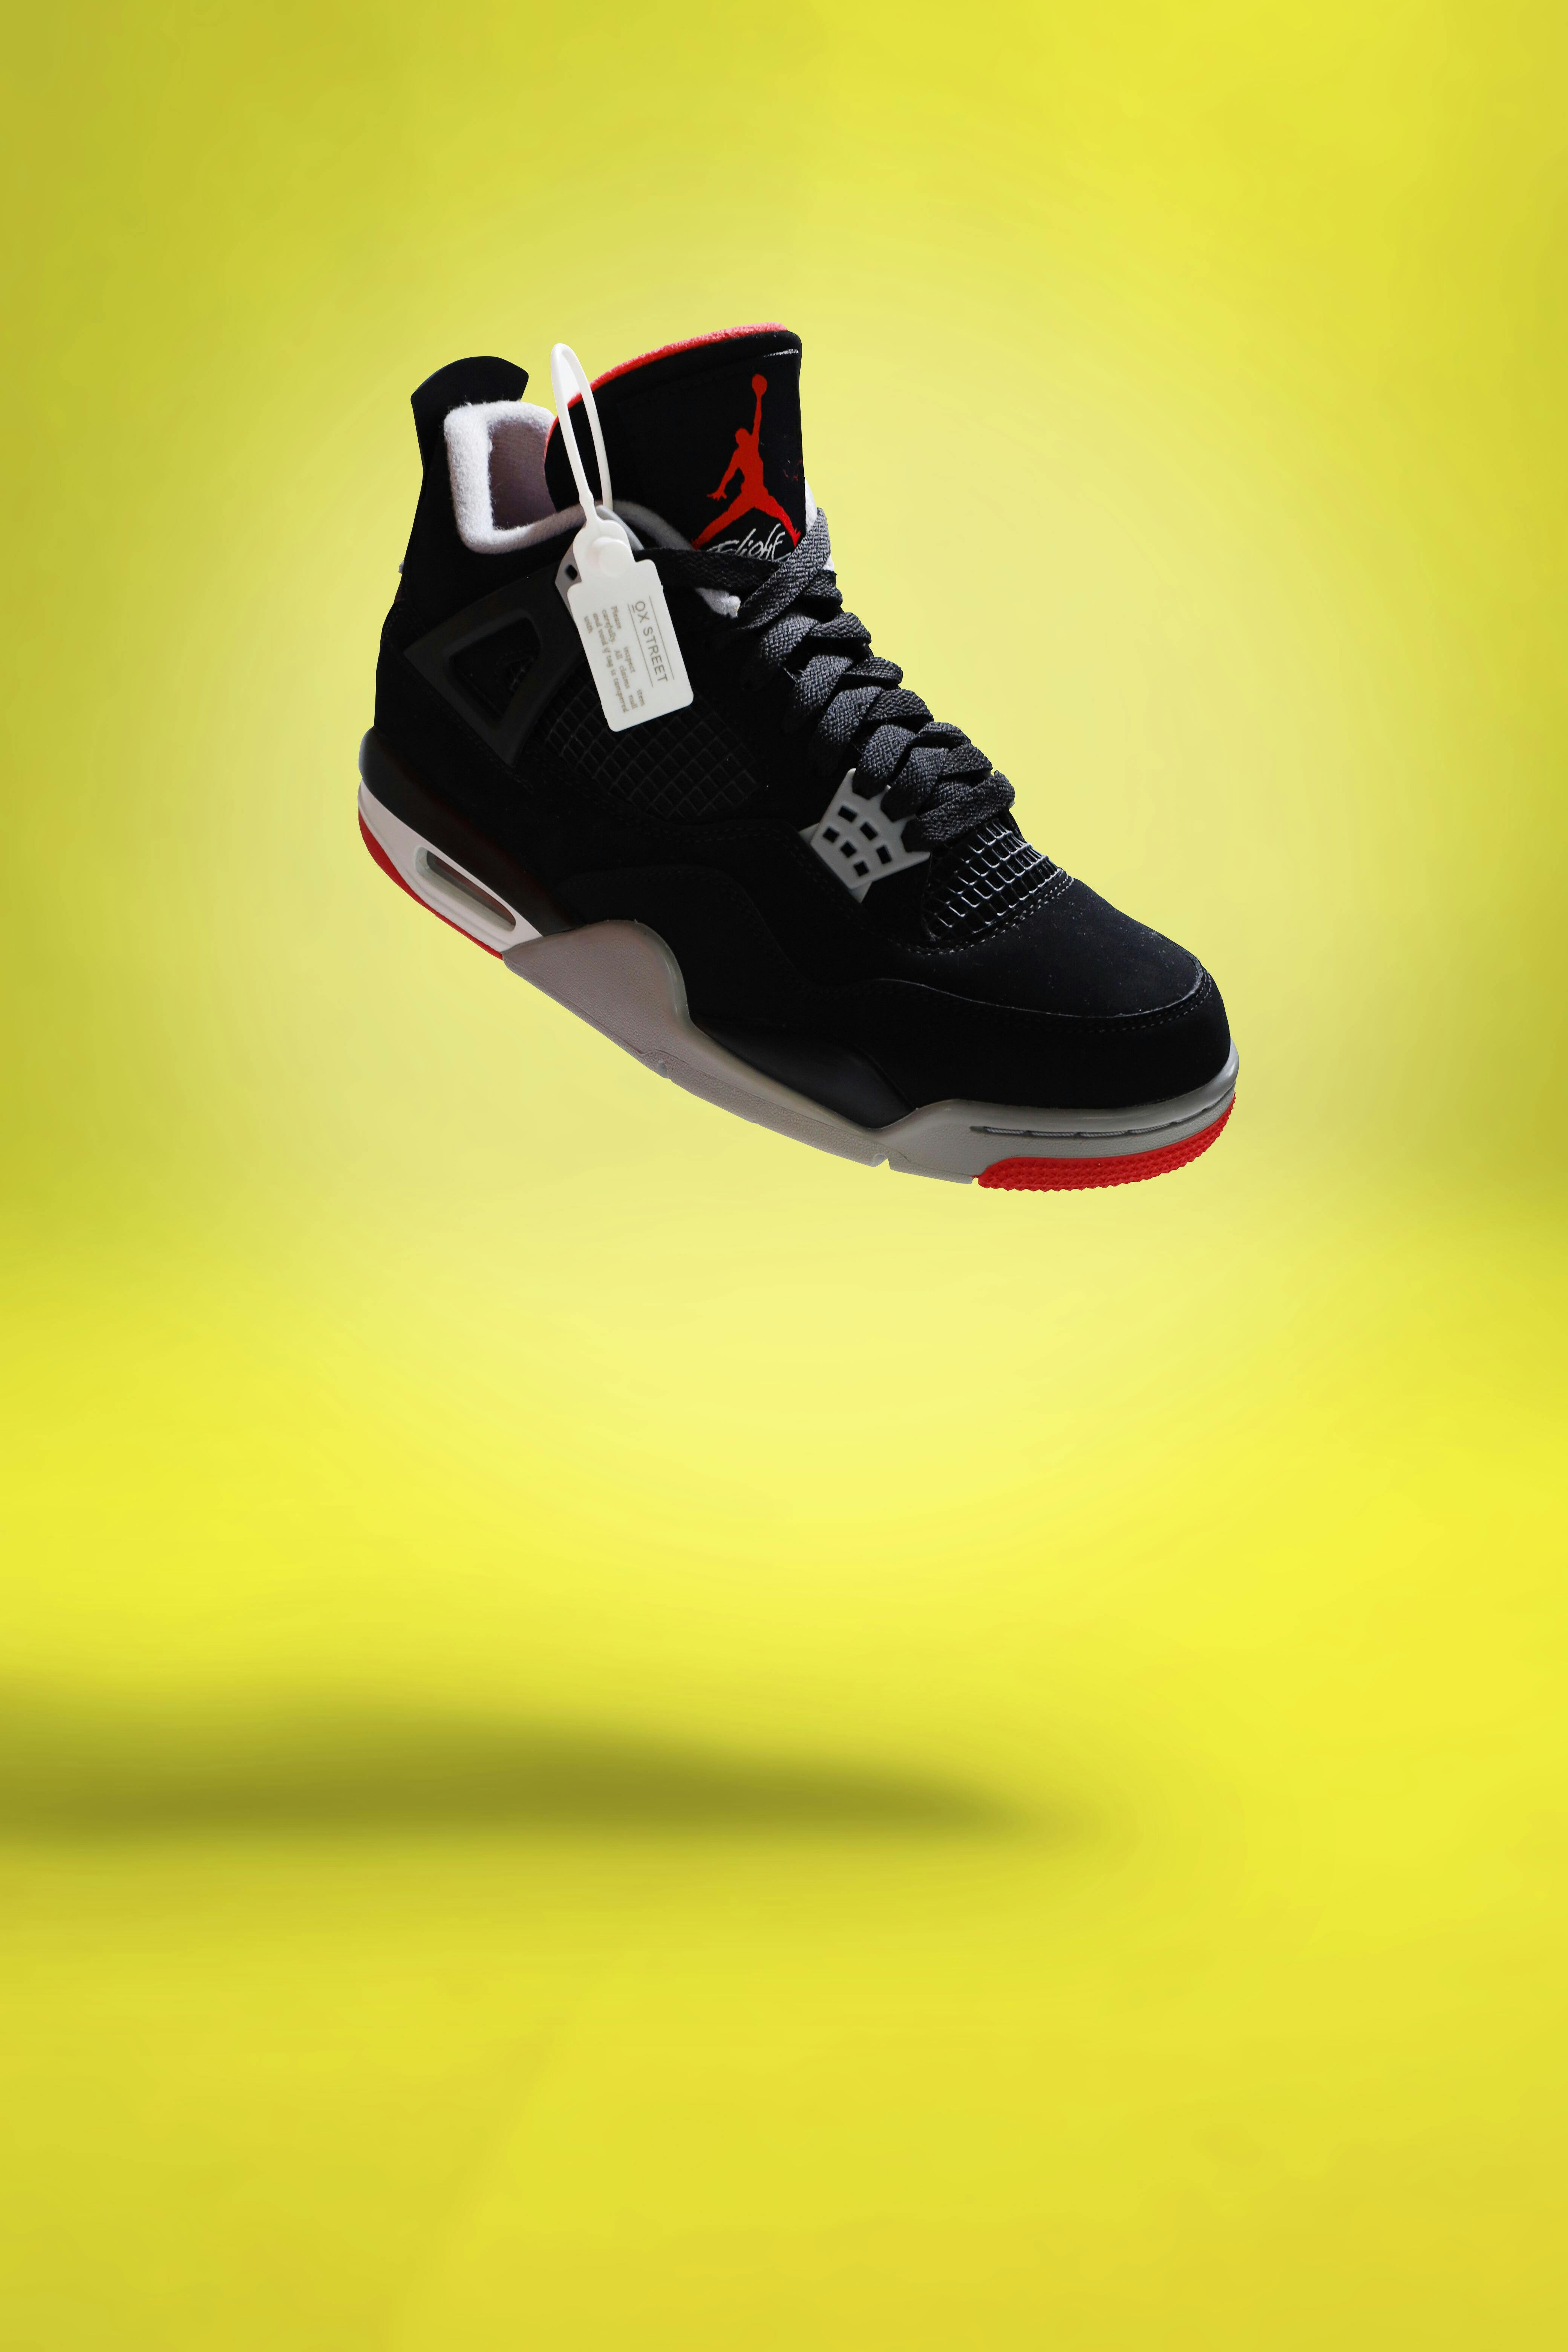 Jordan Shoes Photos, Download The BEST Free Jordan Shoes Stock HD Images